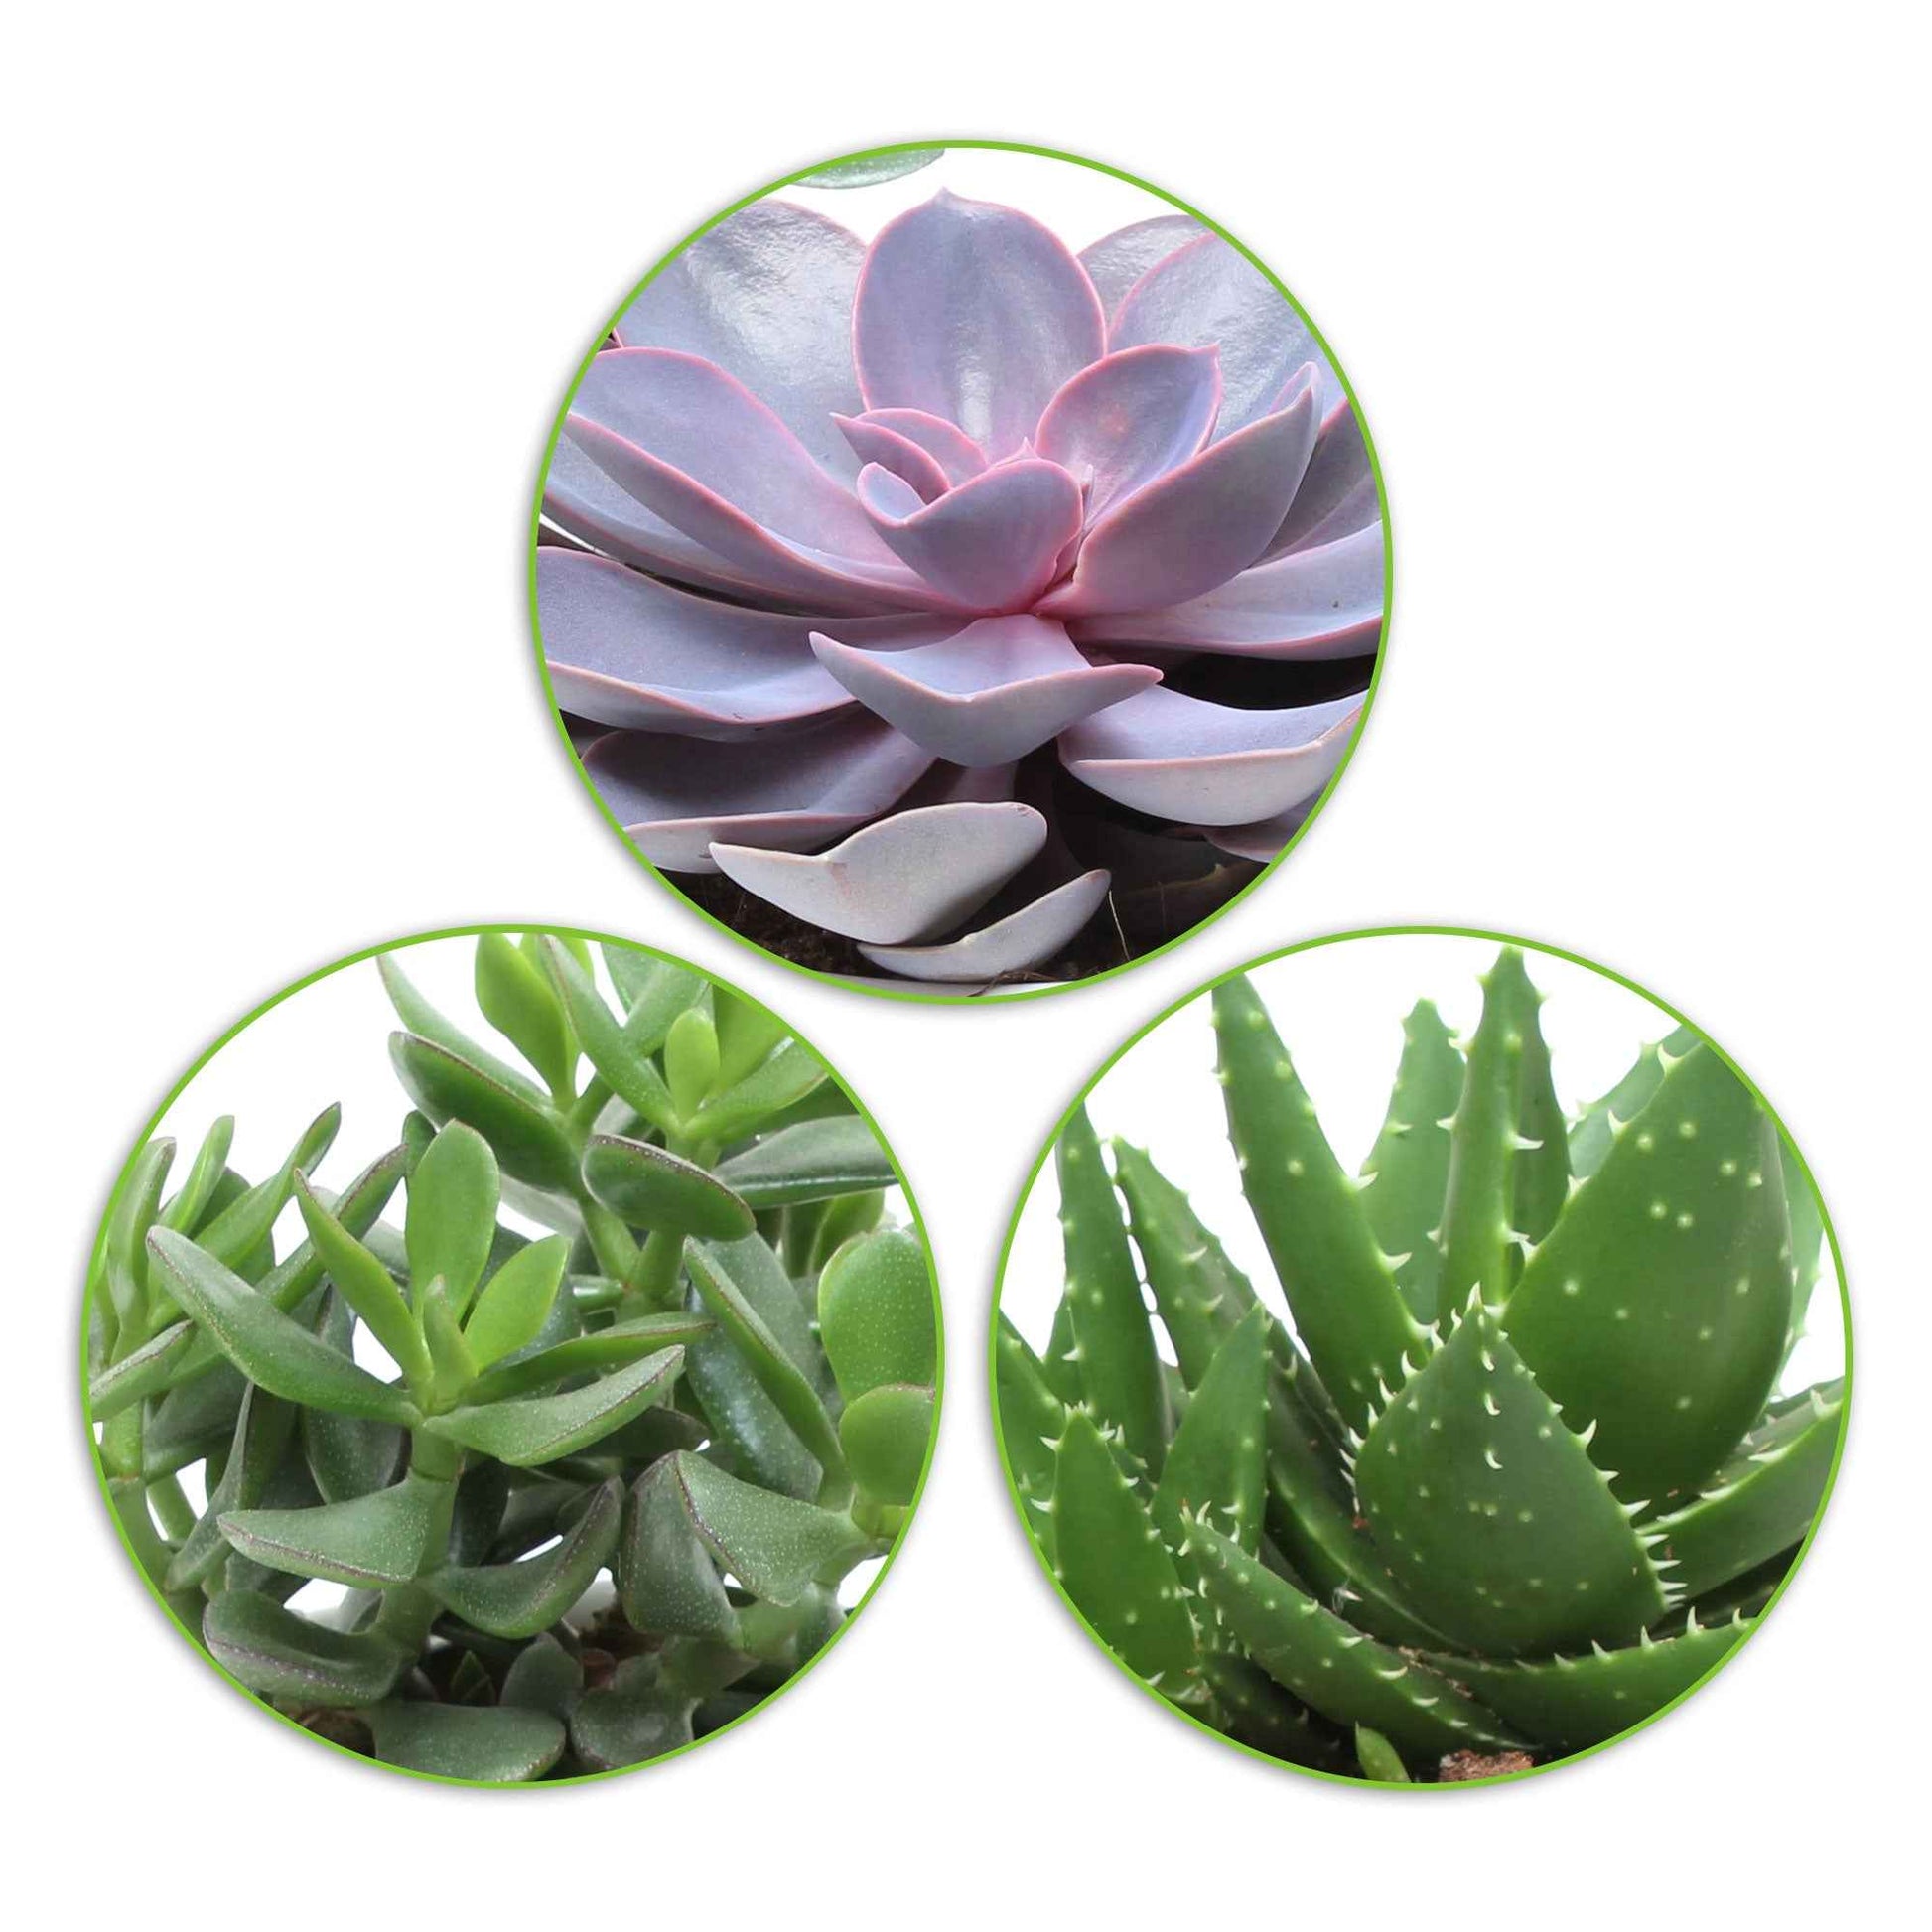 Succulent  Mix - Crassula 'Minova Magic' + 2 Gasterias (x3) - Aloe Perfoliata, Echeveria 'Purple Pearl', Crassula 'Minova Magic' - Op soort